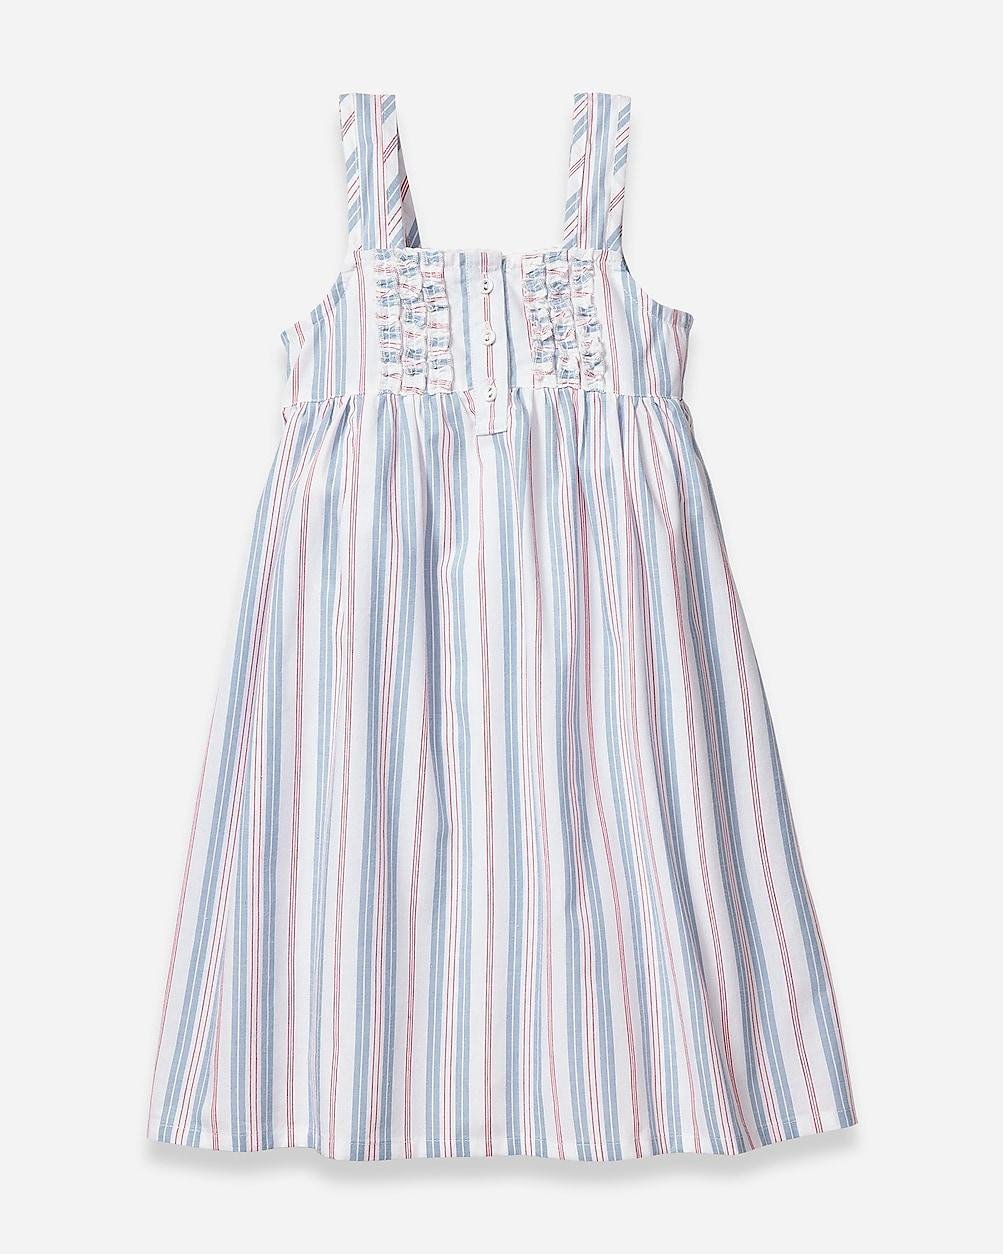 Petite Plume™ kids' Charlotte nightgown by J.CREW